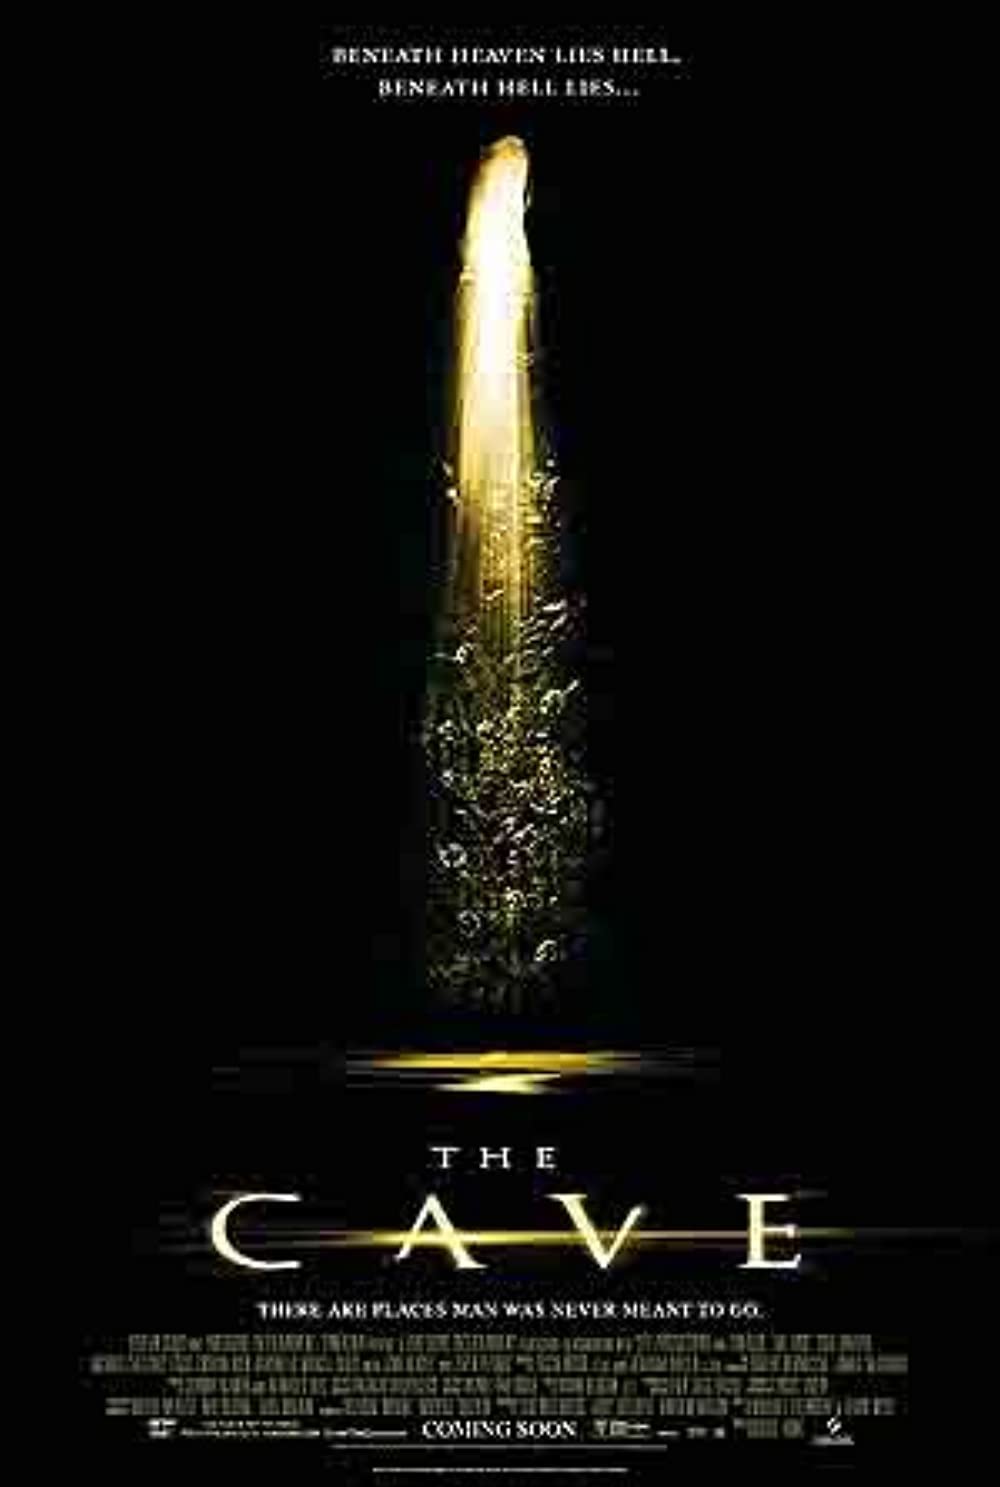 Filmbeschreibung zu The Cave